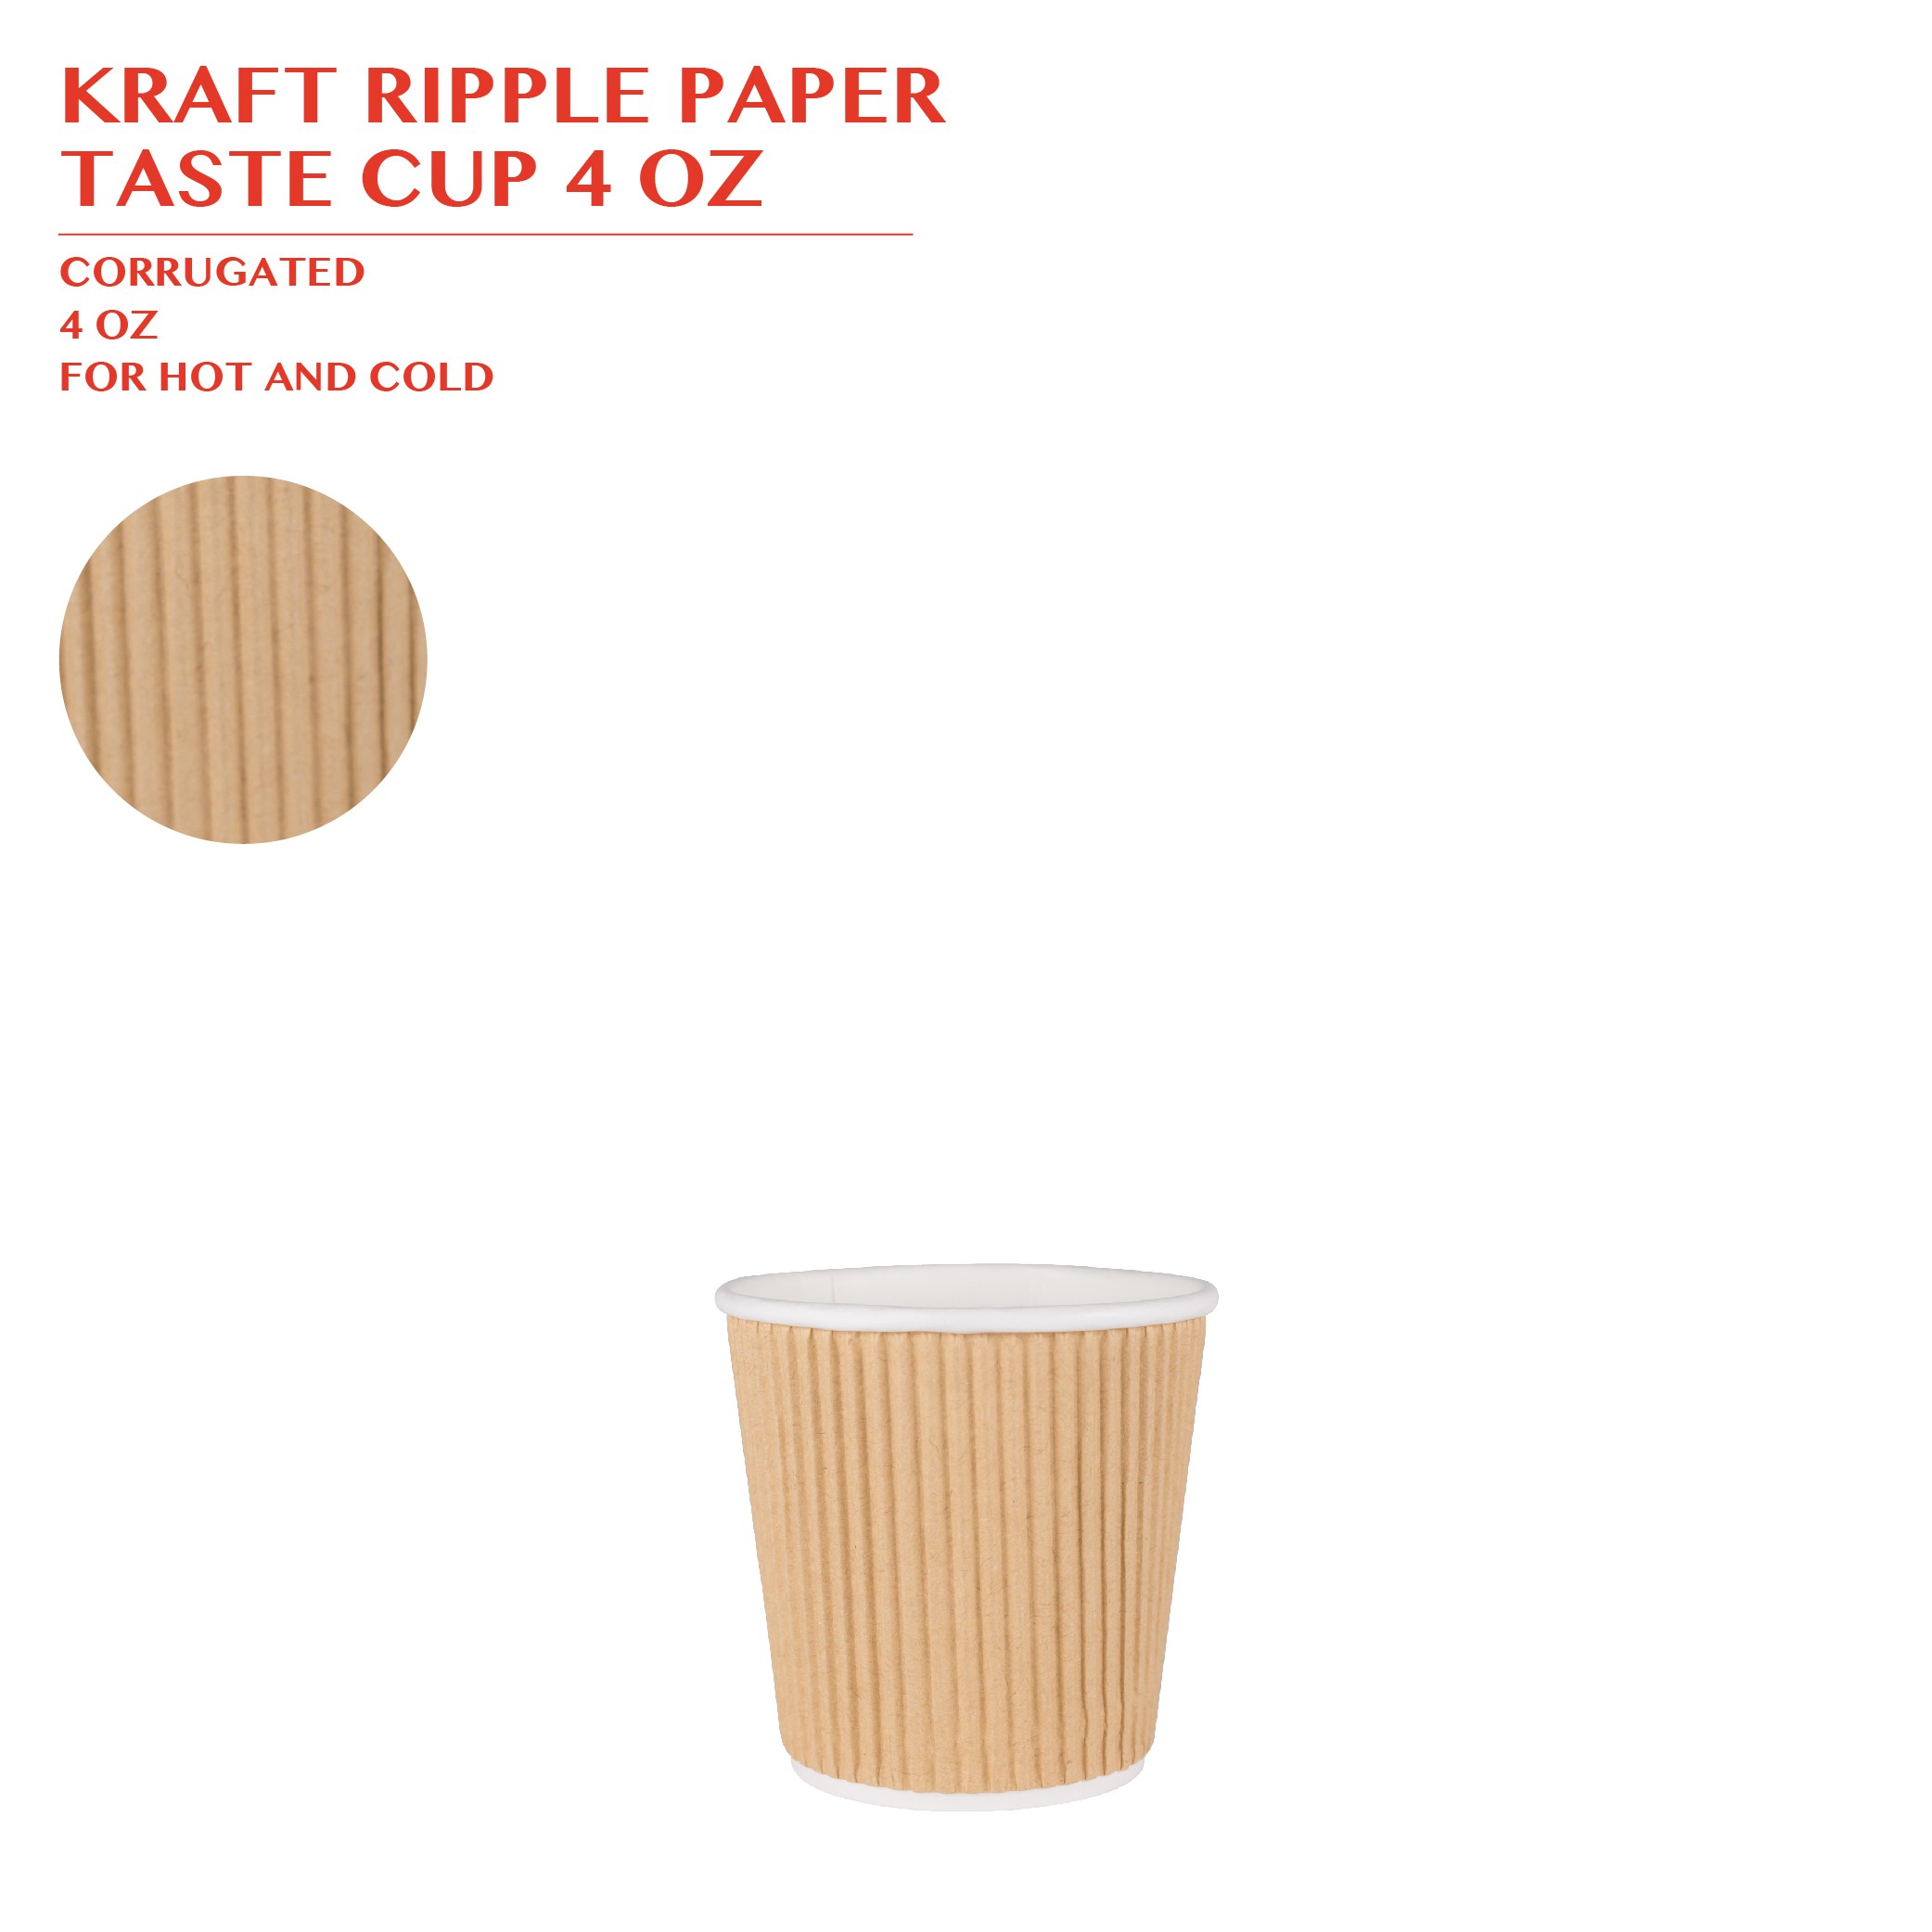 KRAFT RIPPLE PAPER  TASTE CUP 4 OZ 700PCS/CTN